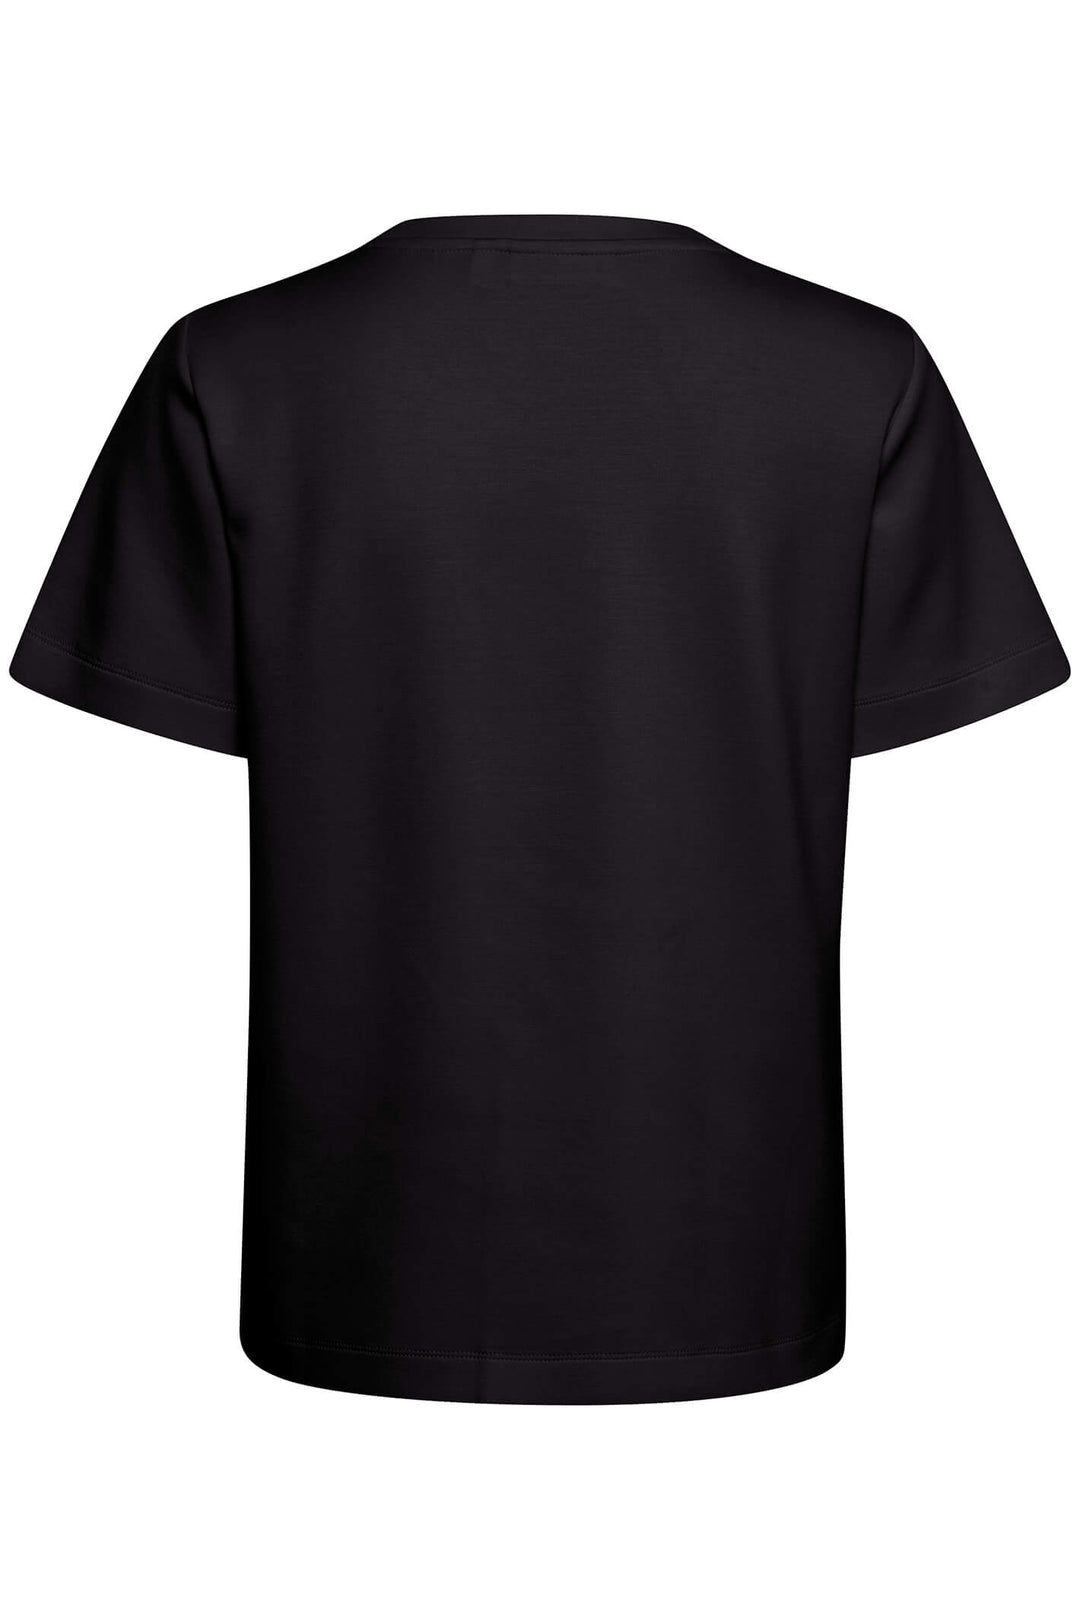 InWear 30106201 194008 Vincent Karmen Black T-Shirt - Shirley Allum Boutique